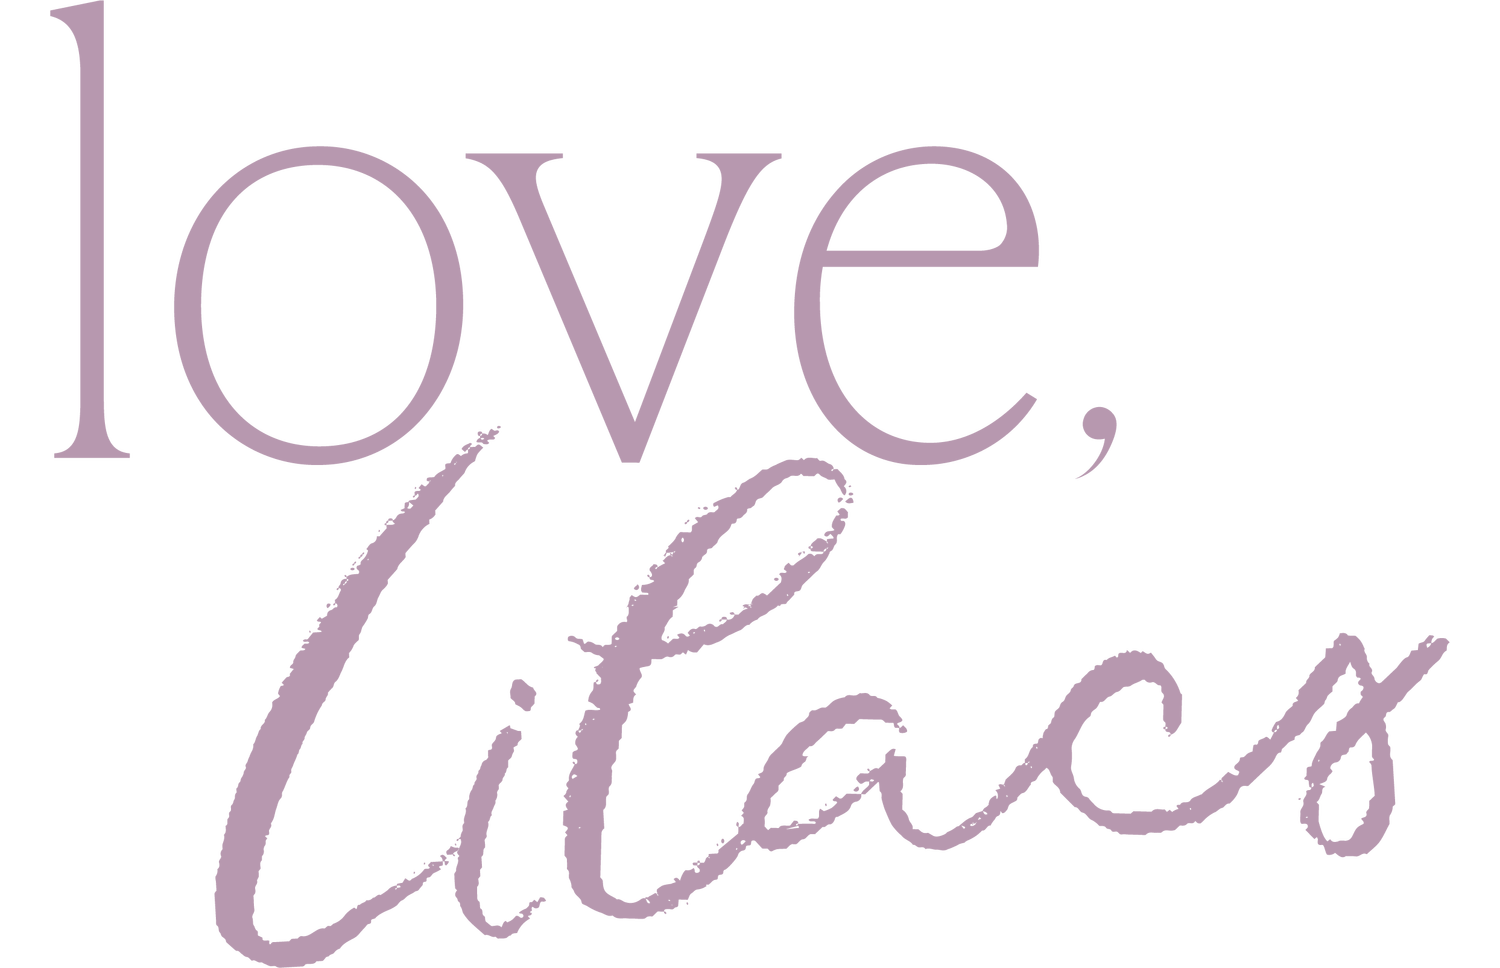 Love, Lilacs Floral | Kansas City weddings and events florist